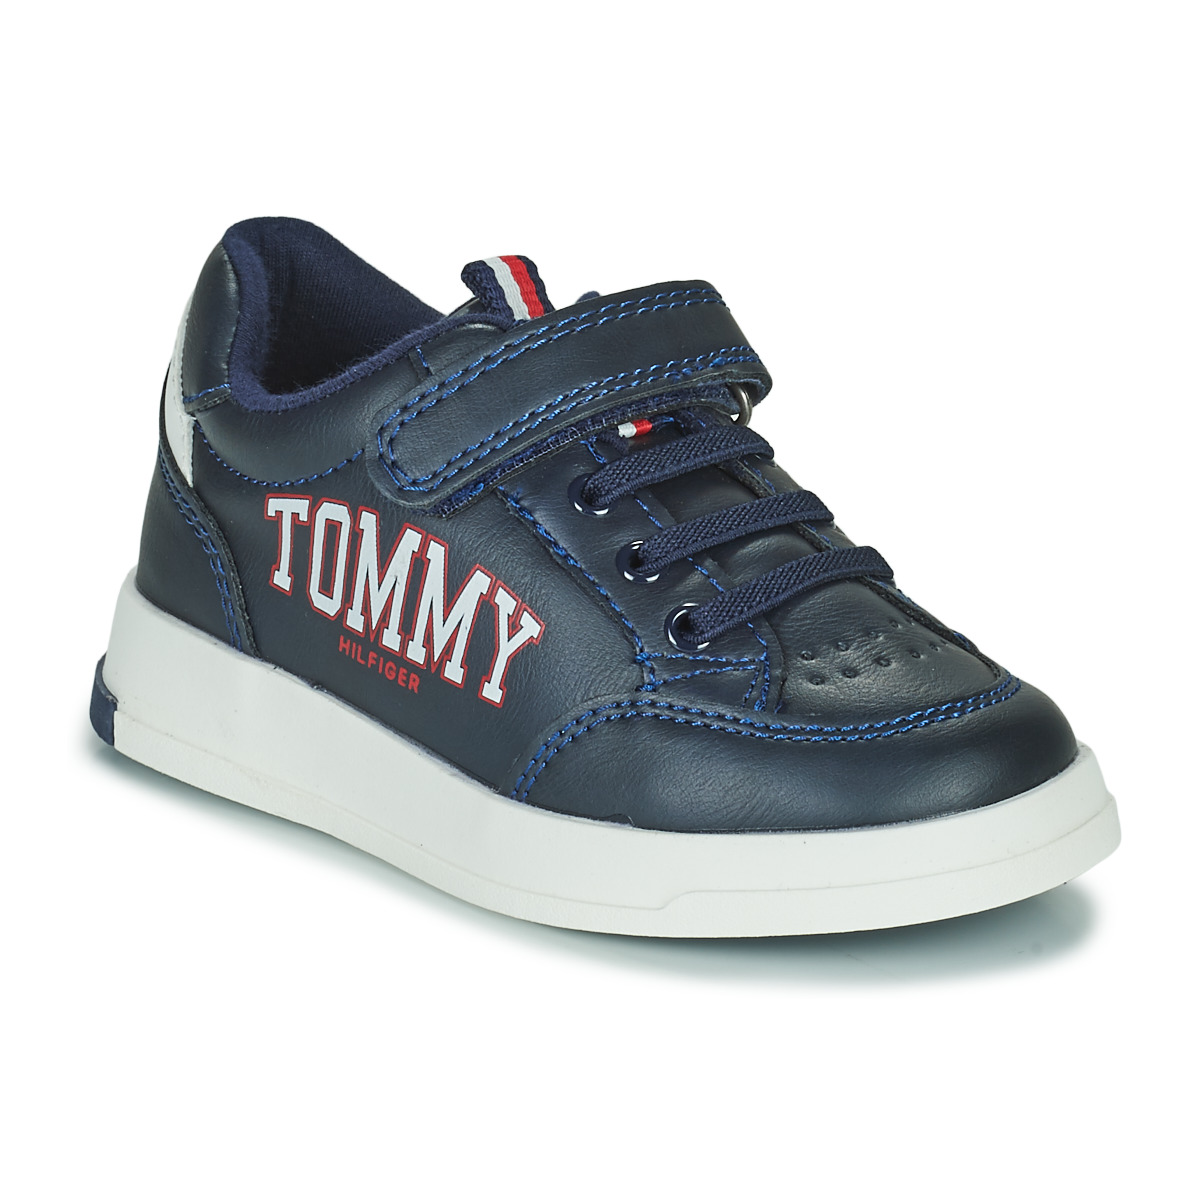 Sapatos Rapariga Sapatilhas Tommy Hilfiger KRISTEL Azul